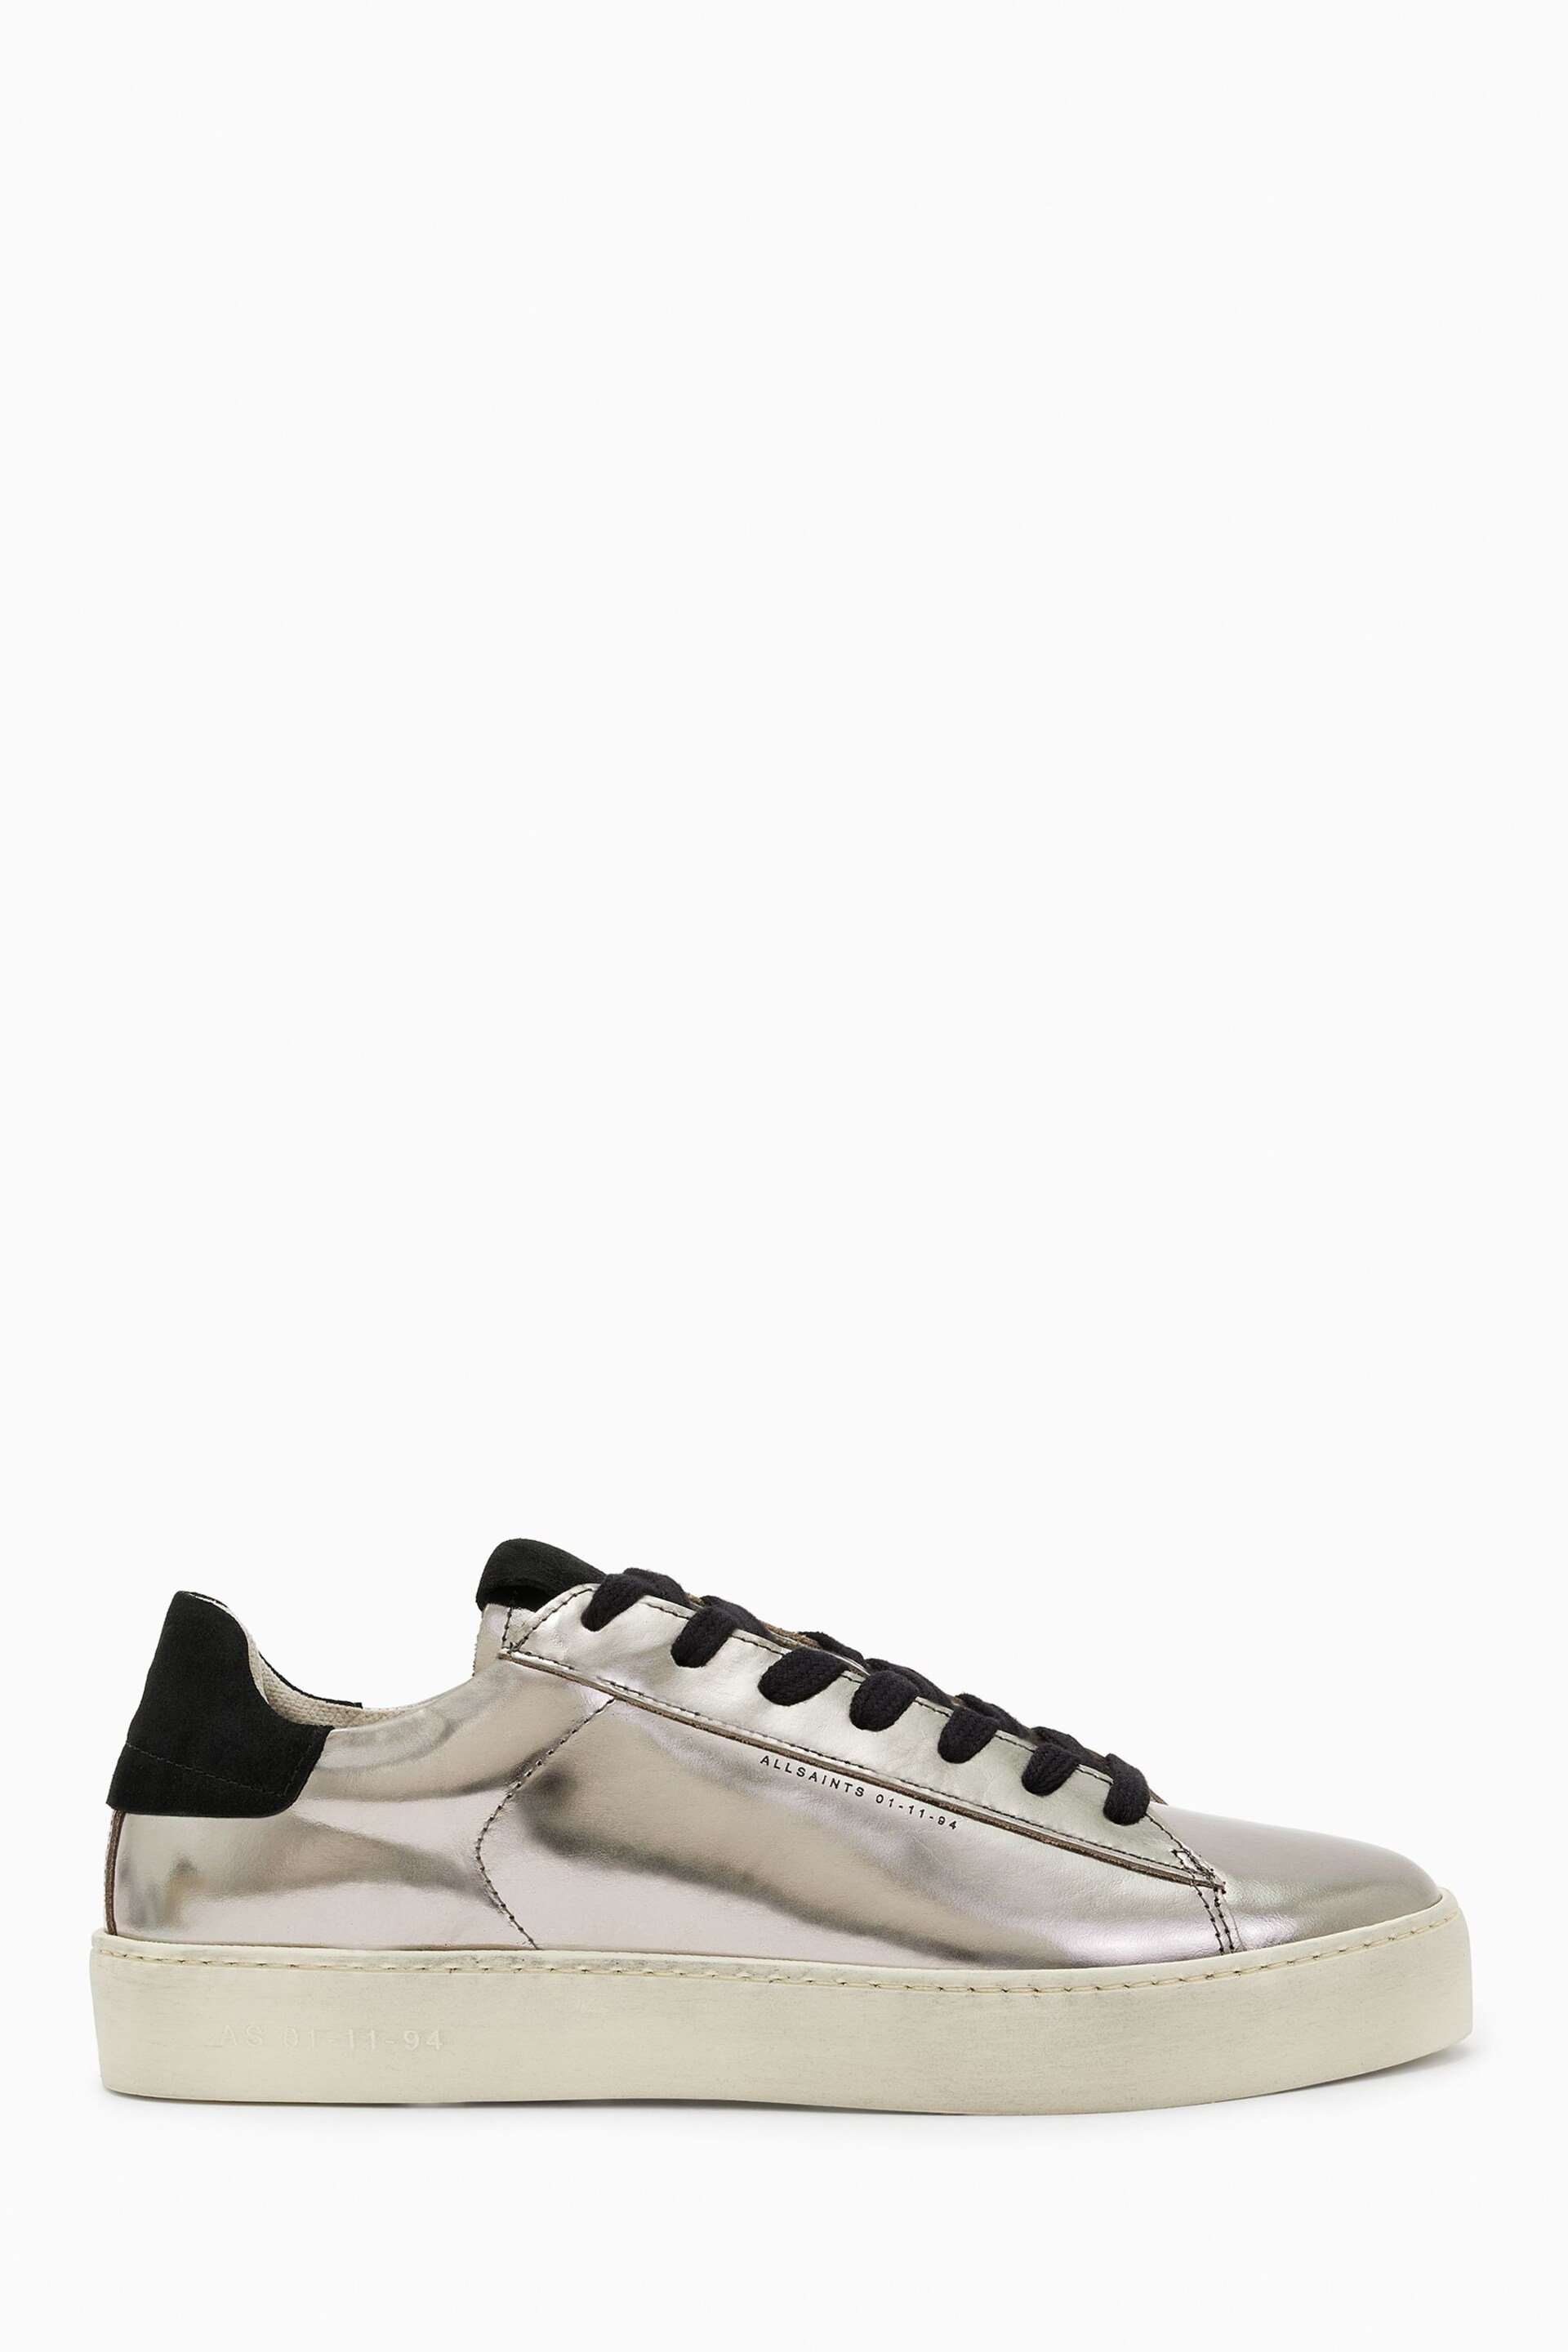 AllSaints Silver Shana  Shoes - Image 1 of 5